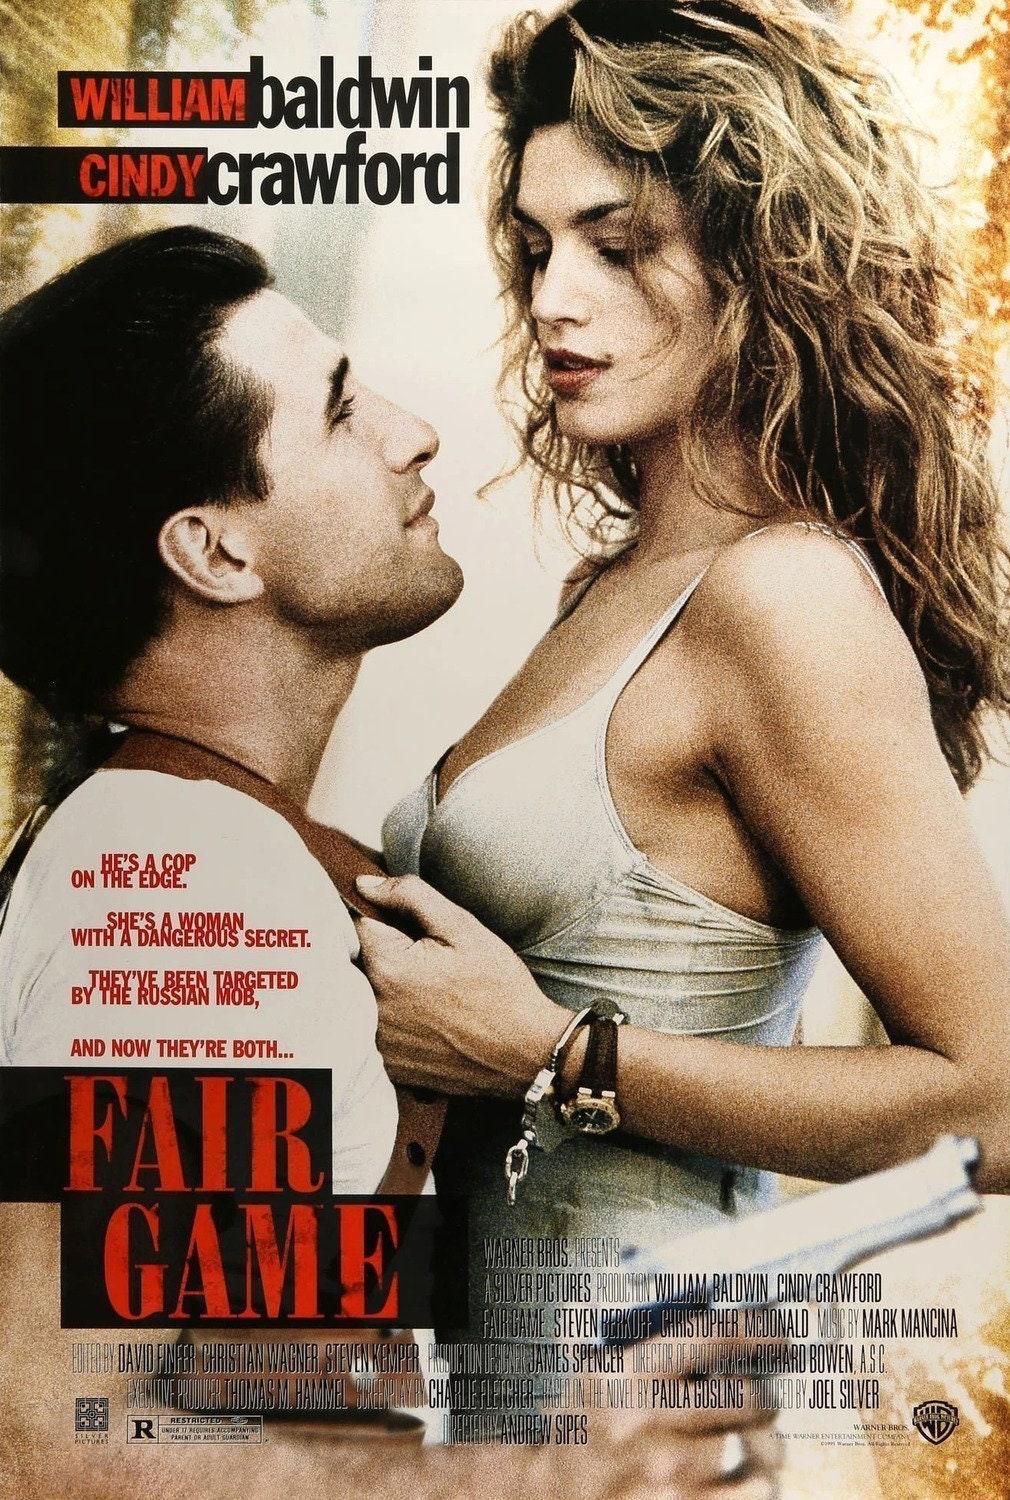 Fair Game (1995 film) Warner Bros picture